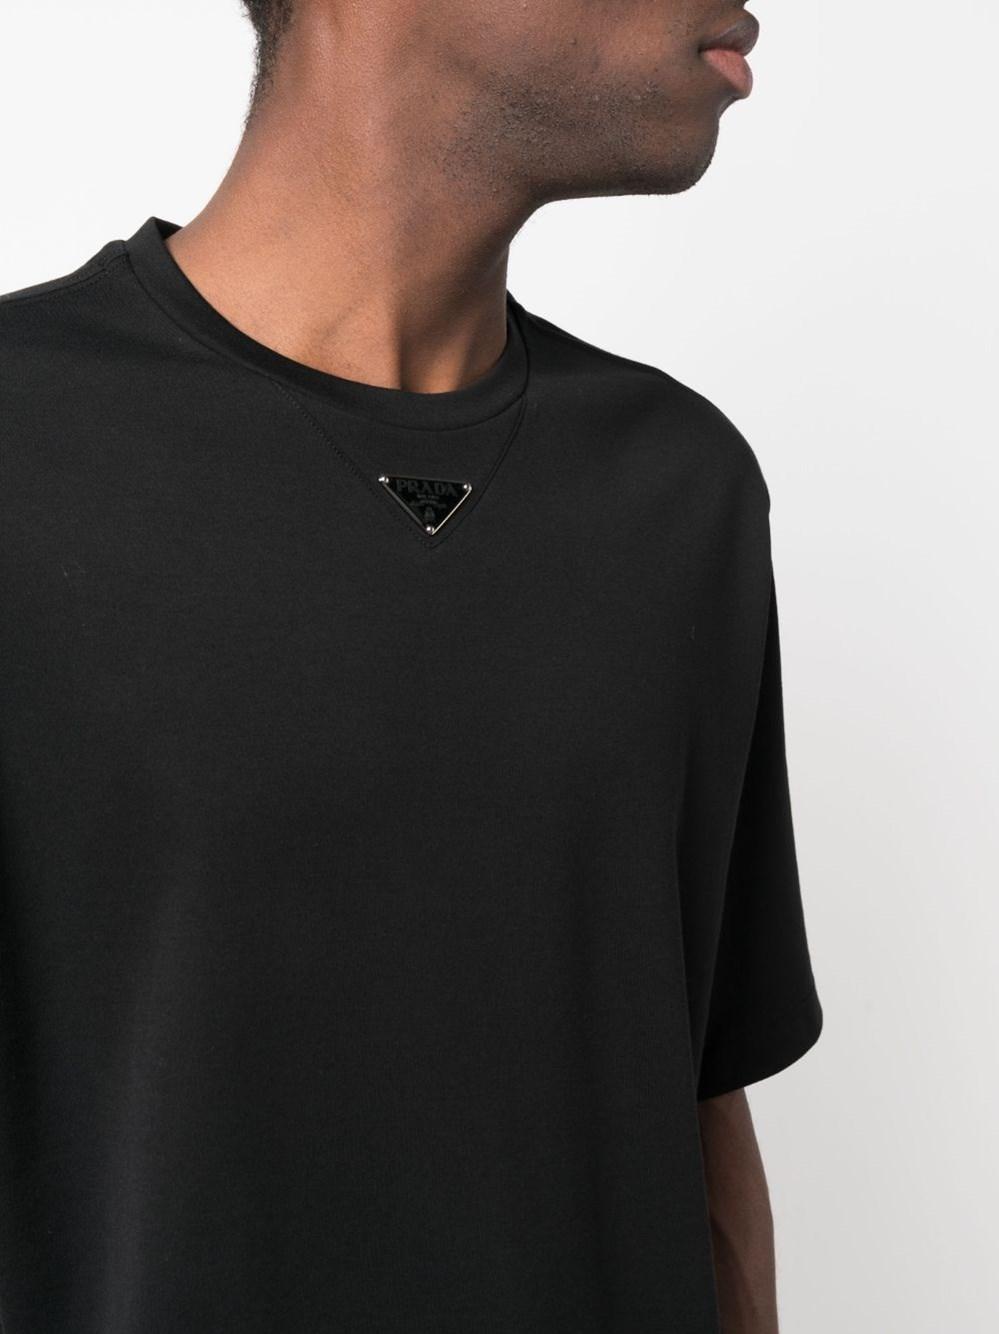 Prada T-shirt in Black for Men | Lyst